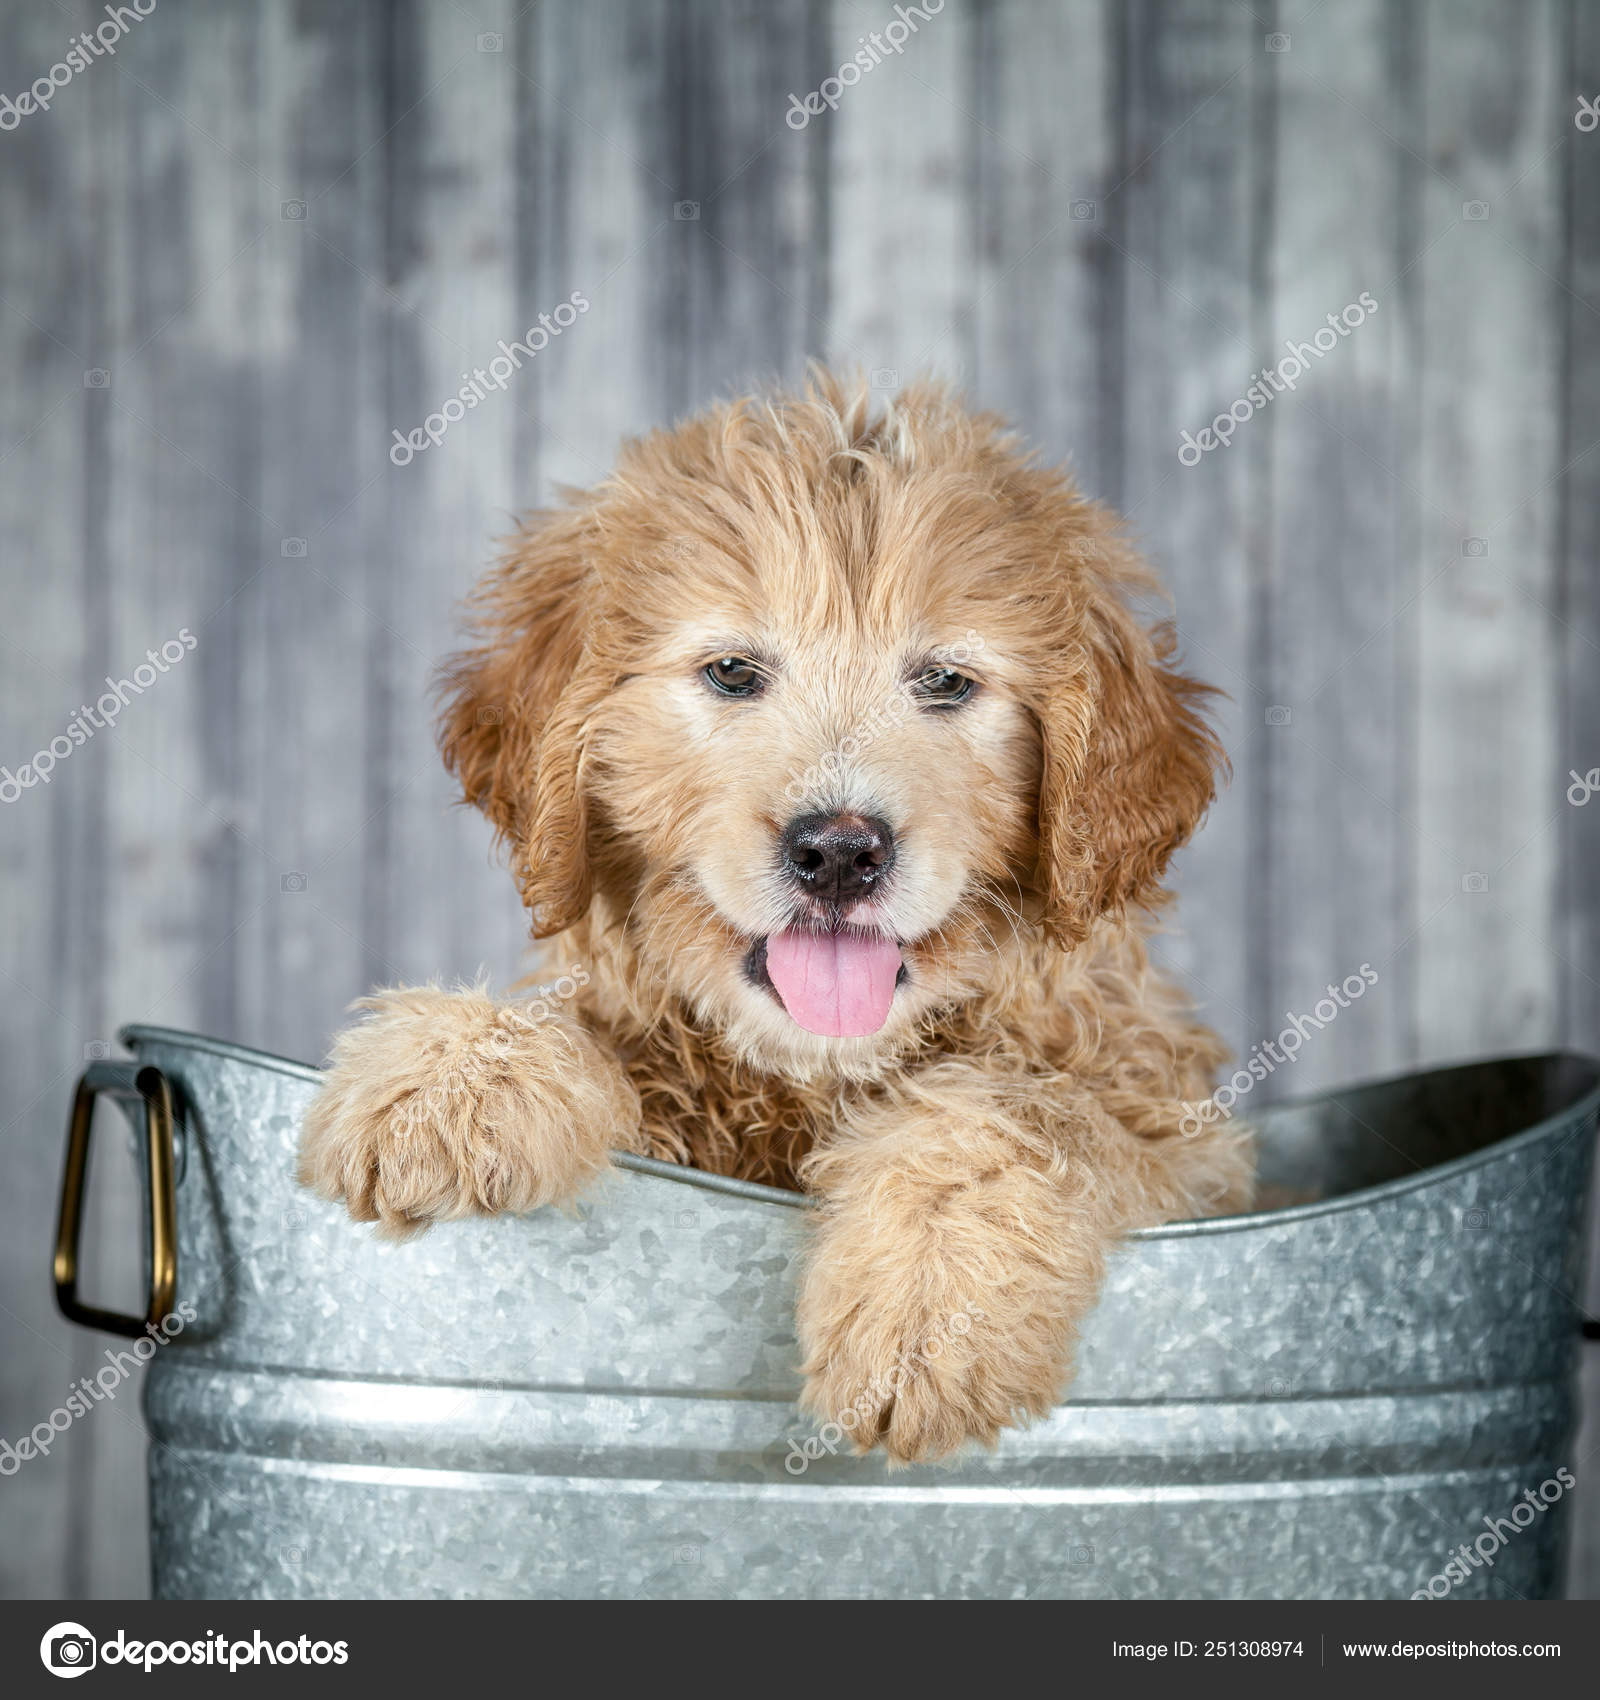 depositphotos_251308974-stock-photo-sweet-adorable-goldendoodle-puppy